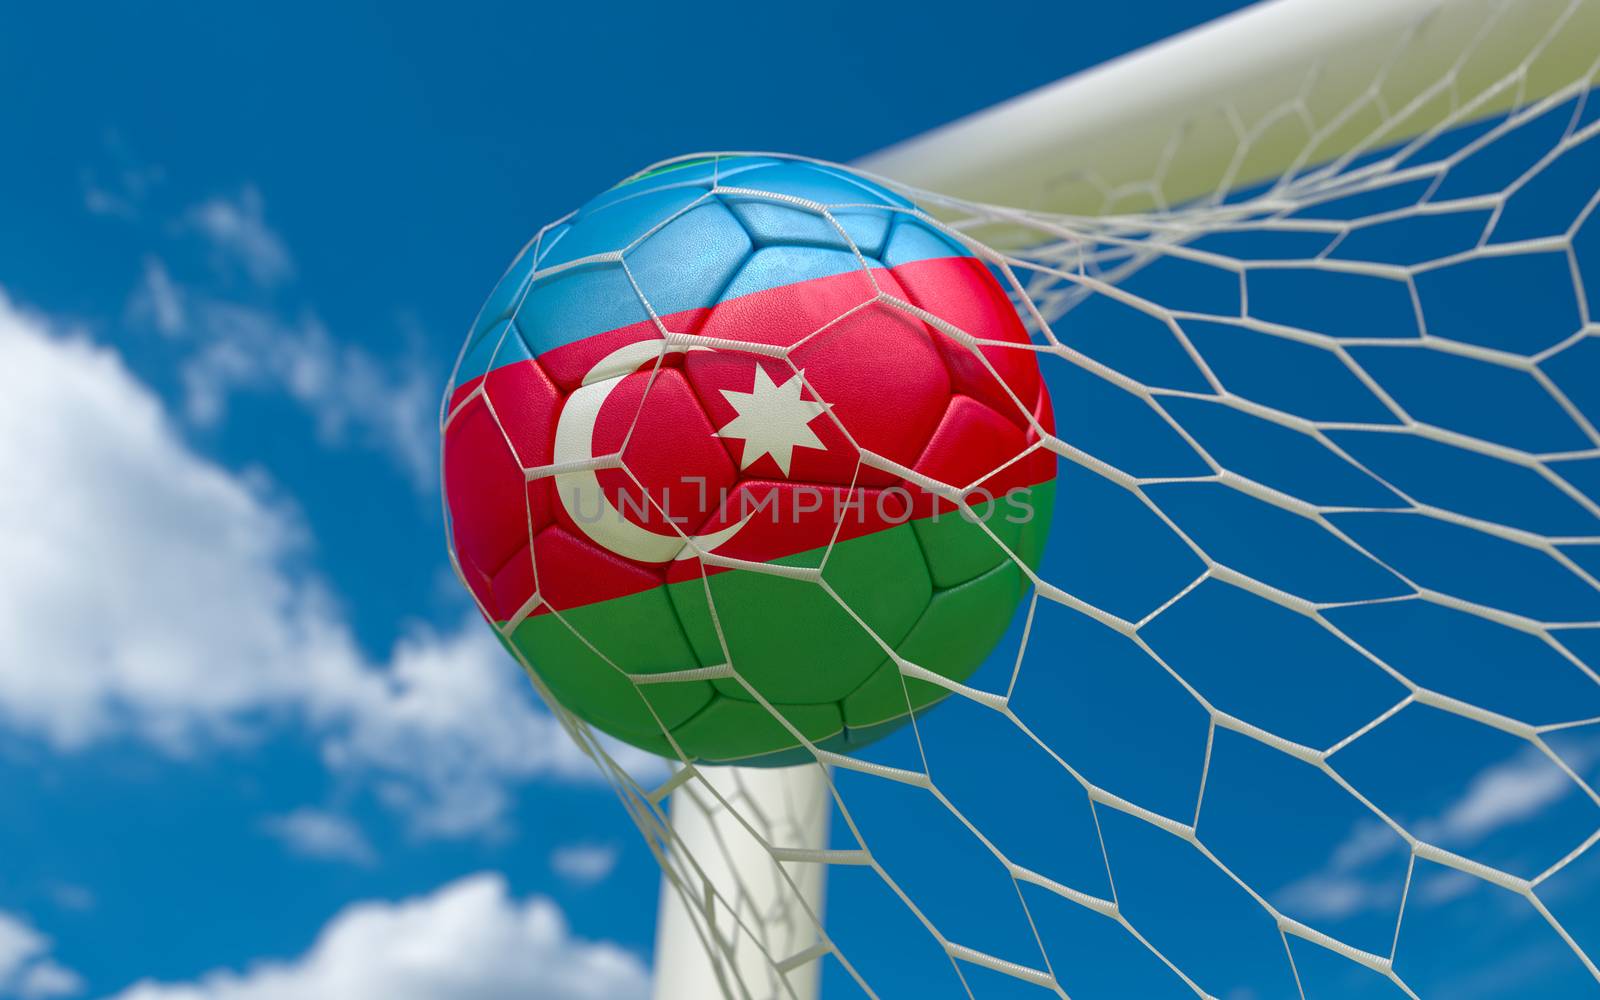 Flag of Azerbajan and soccer ball in goal net by Barbraford